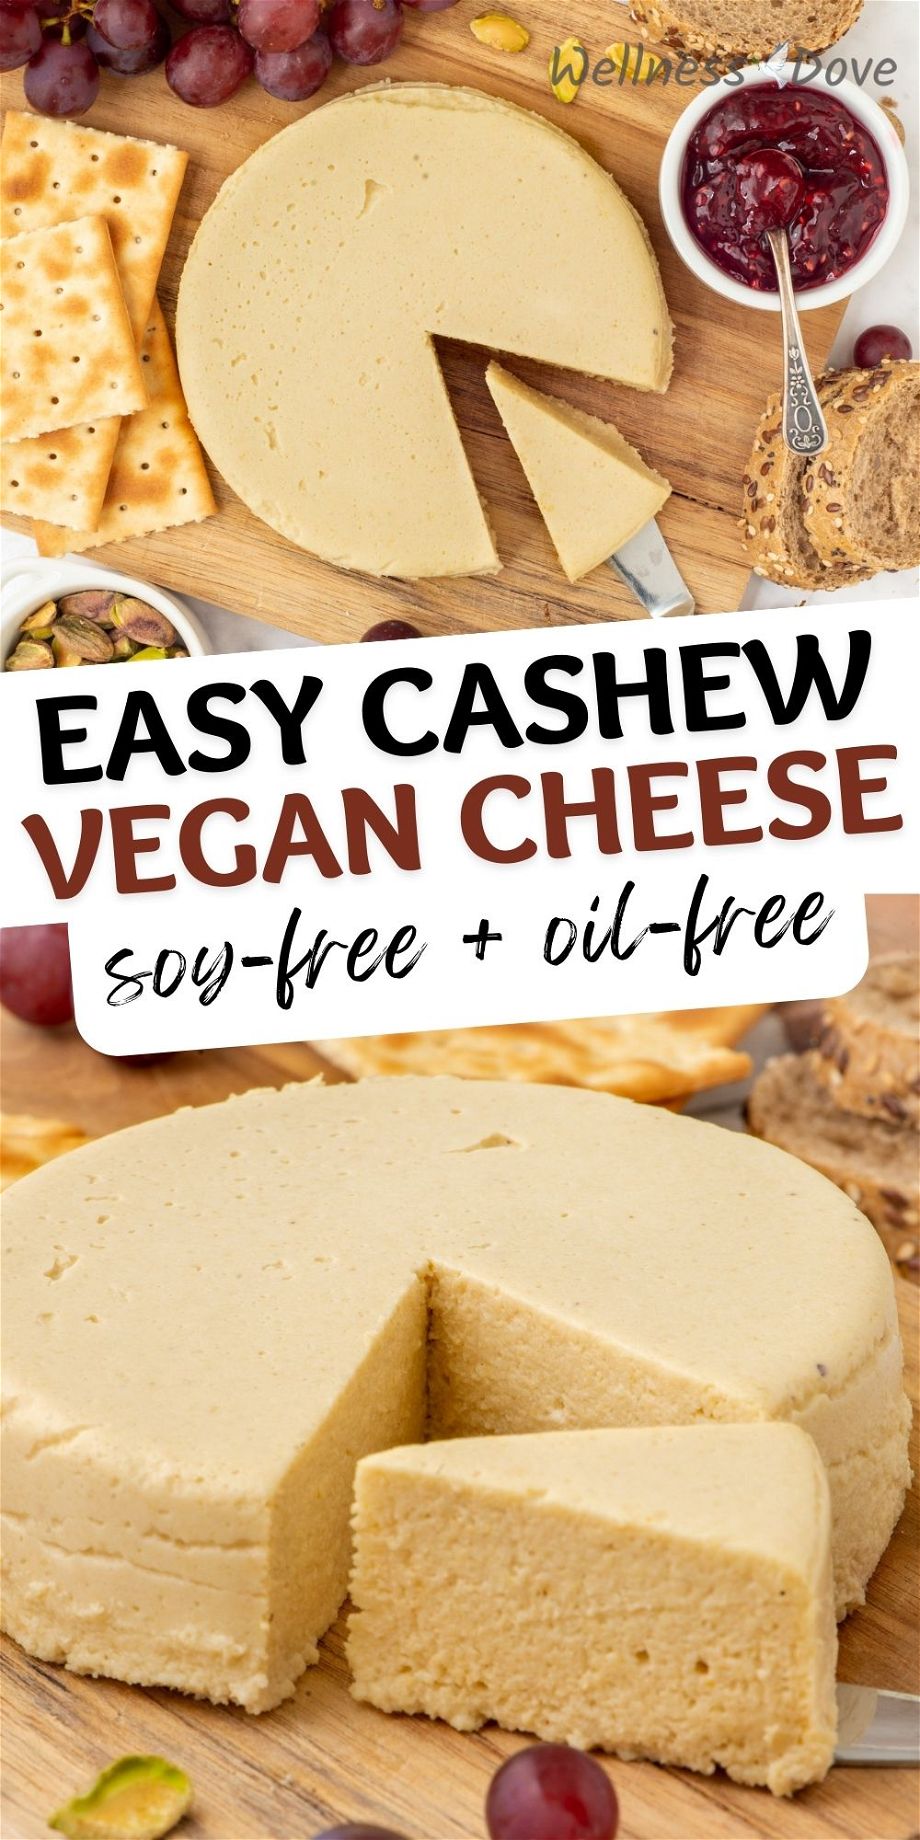 easy vegan cashew cheese pinterest image